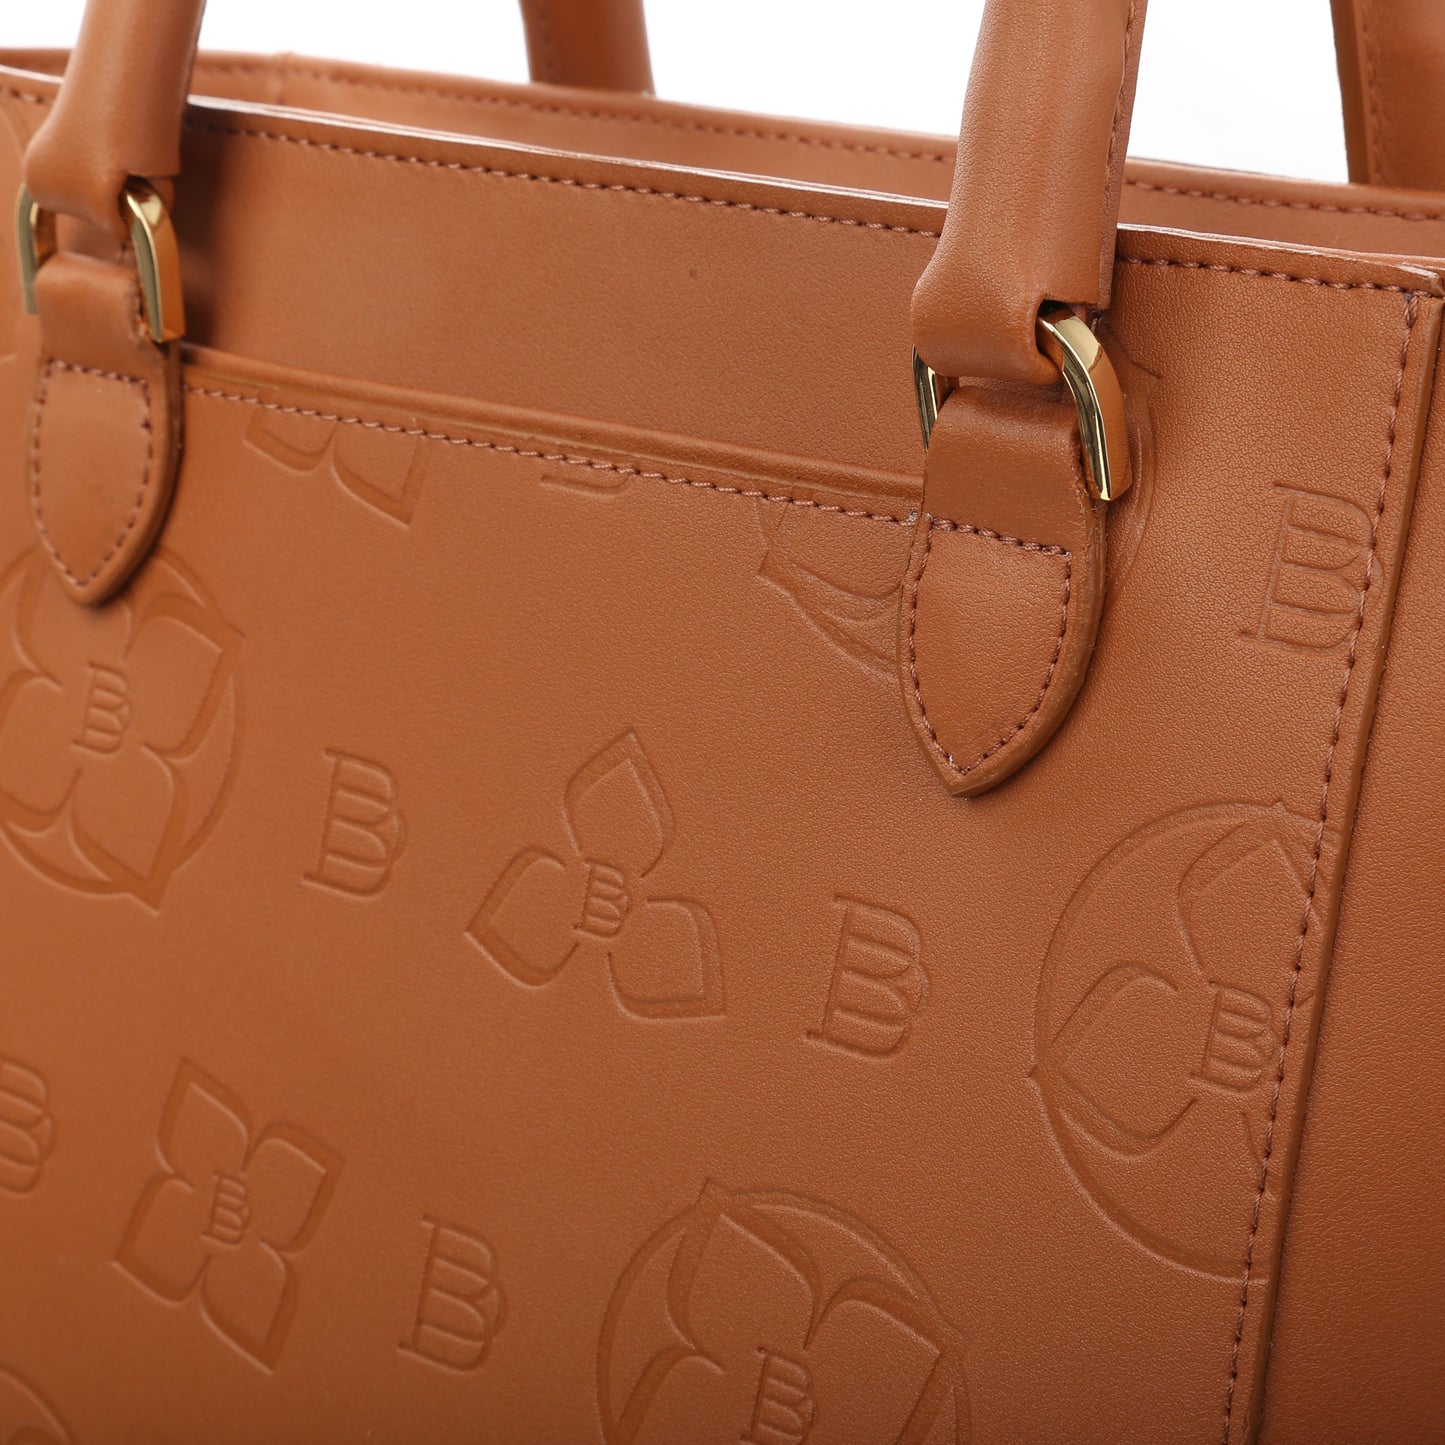 STAMPIA S NAPA COGNAC women's leather handbag